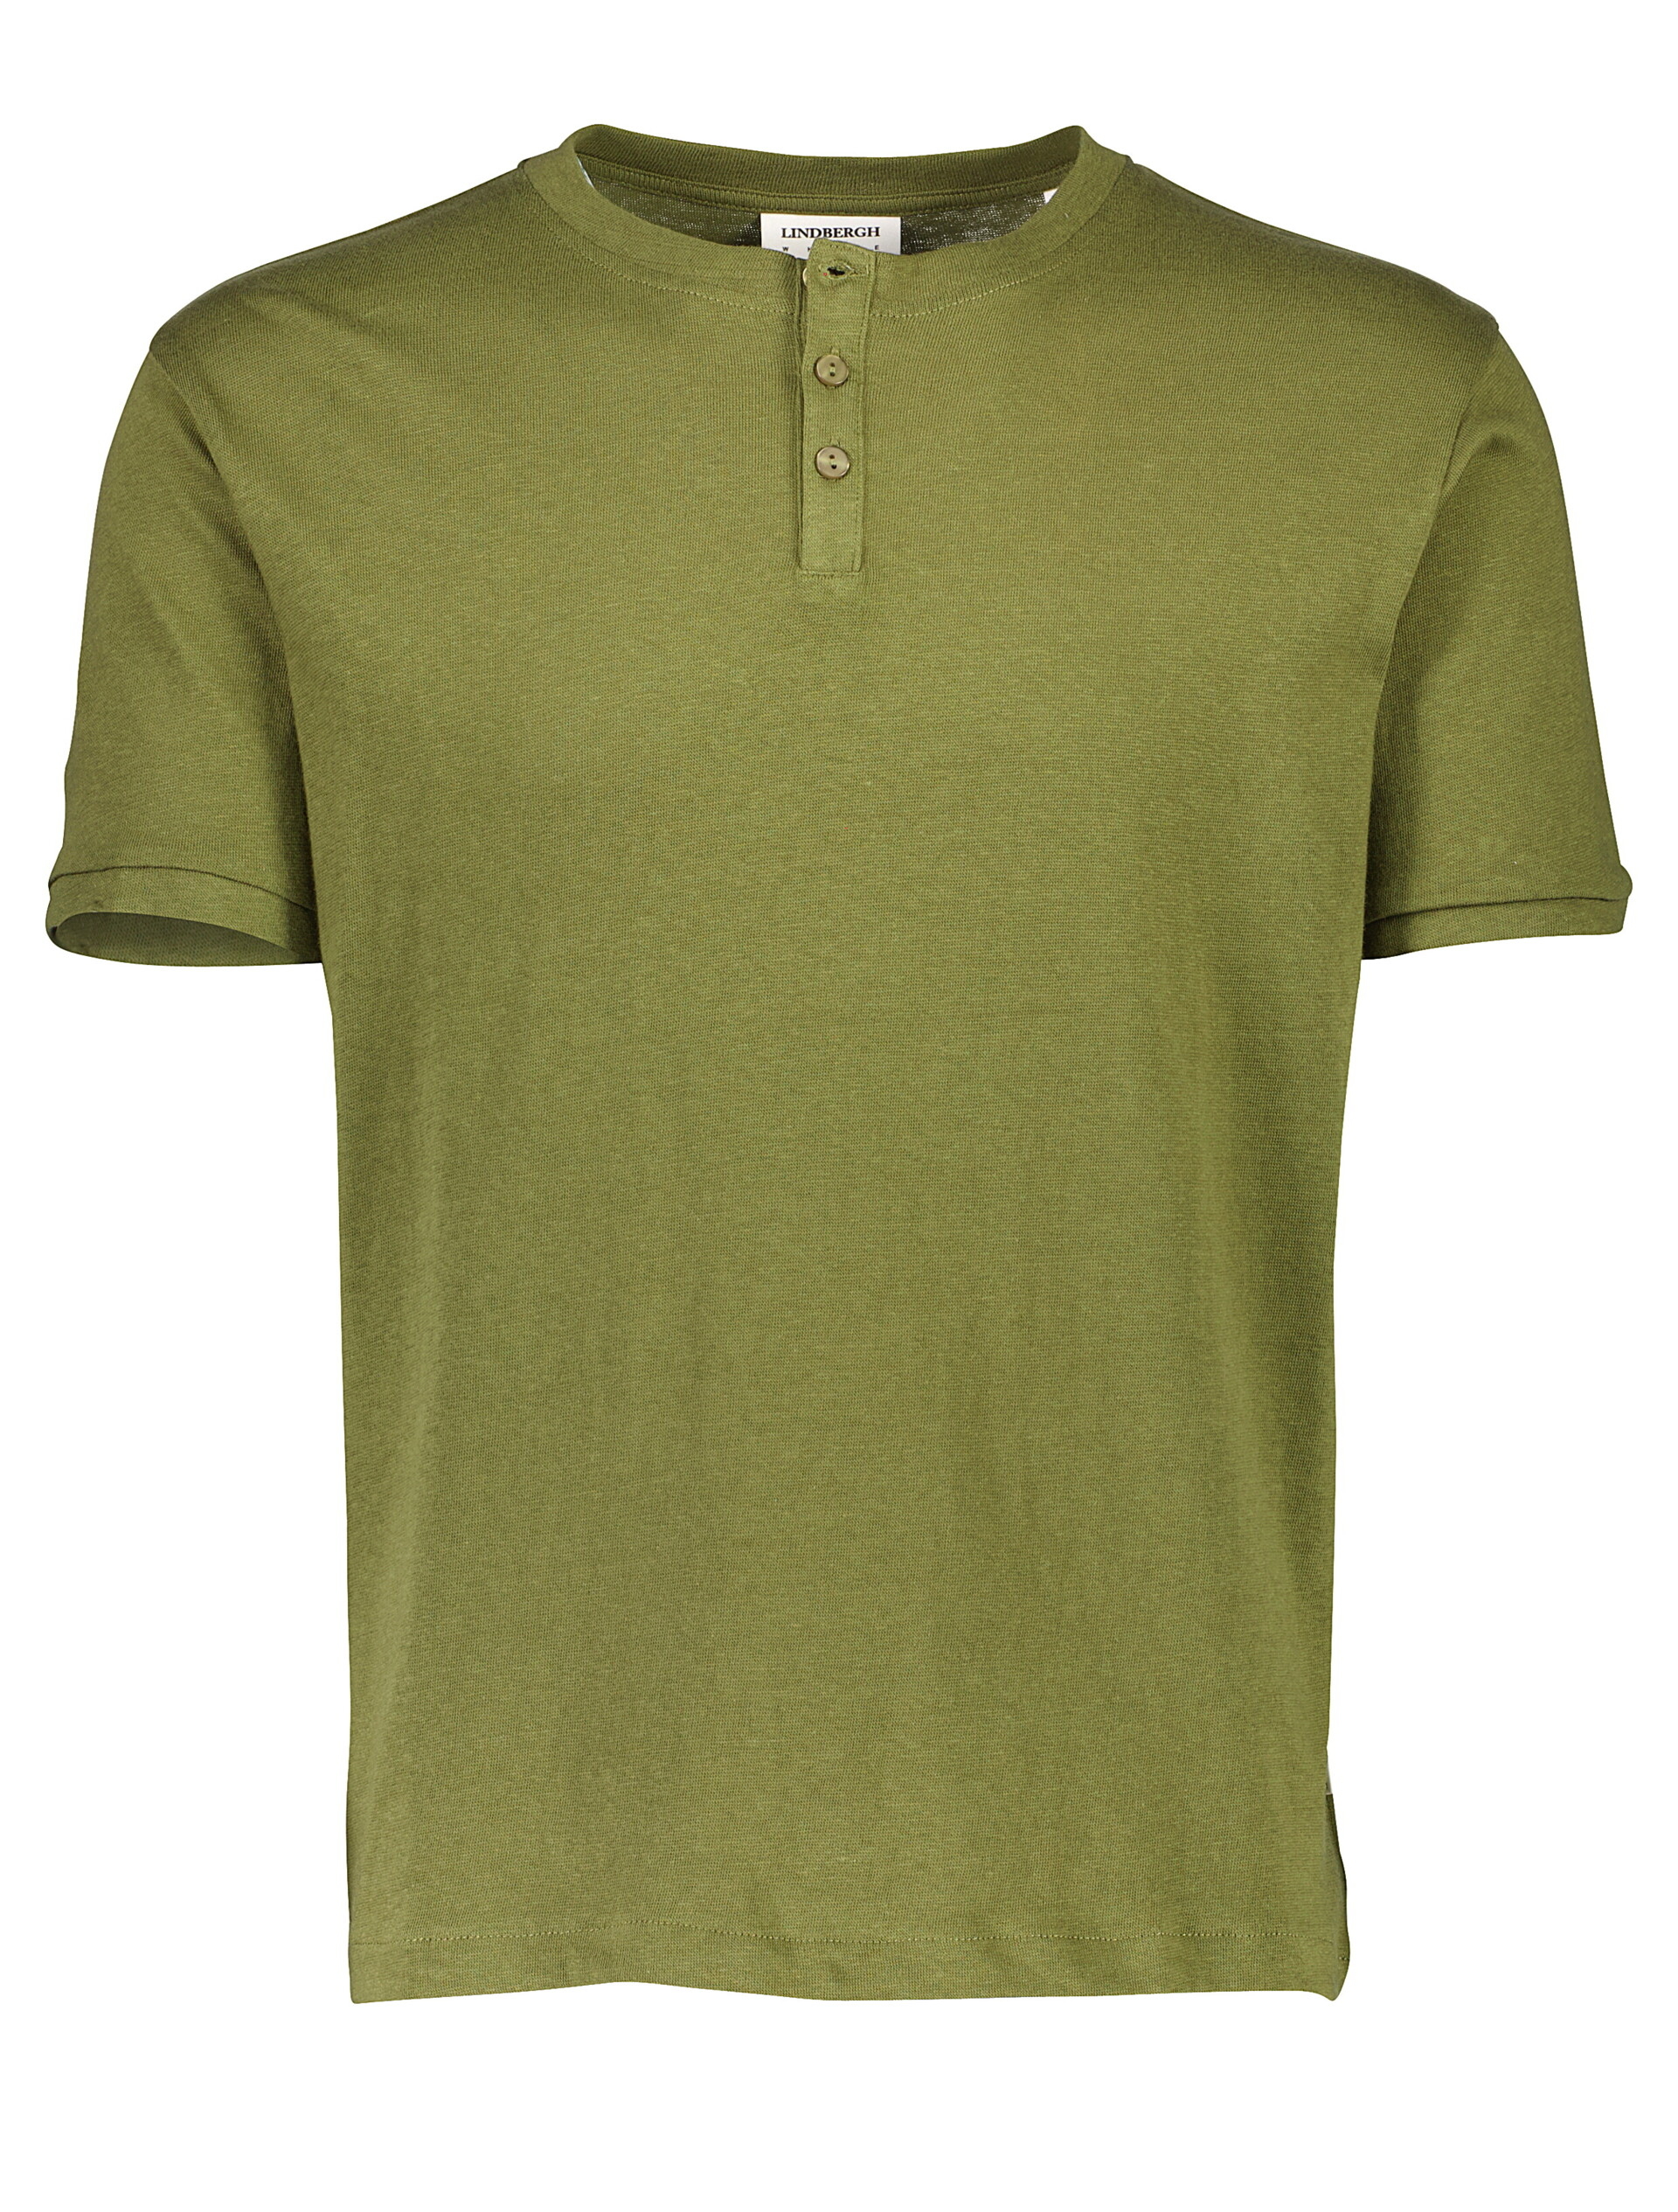 Lindbergh Henley shirt grön / army